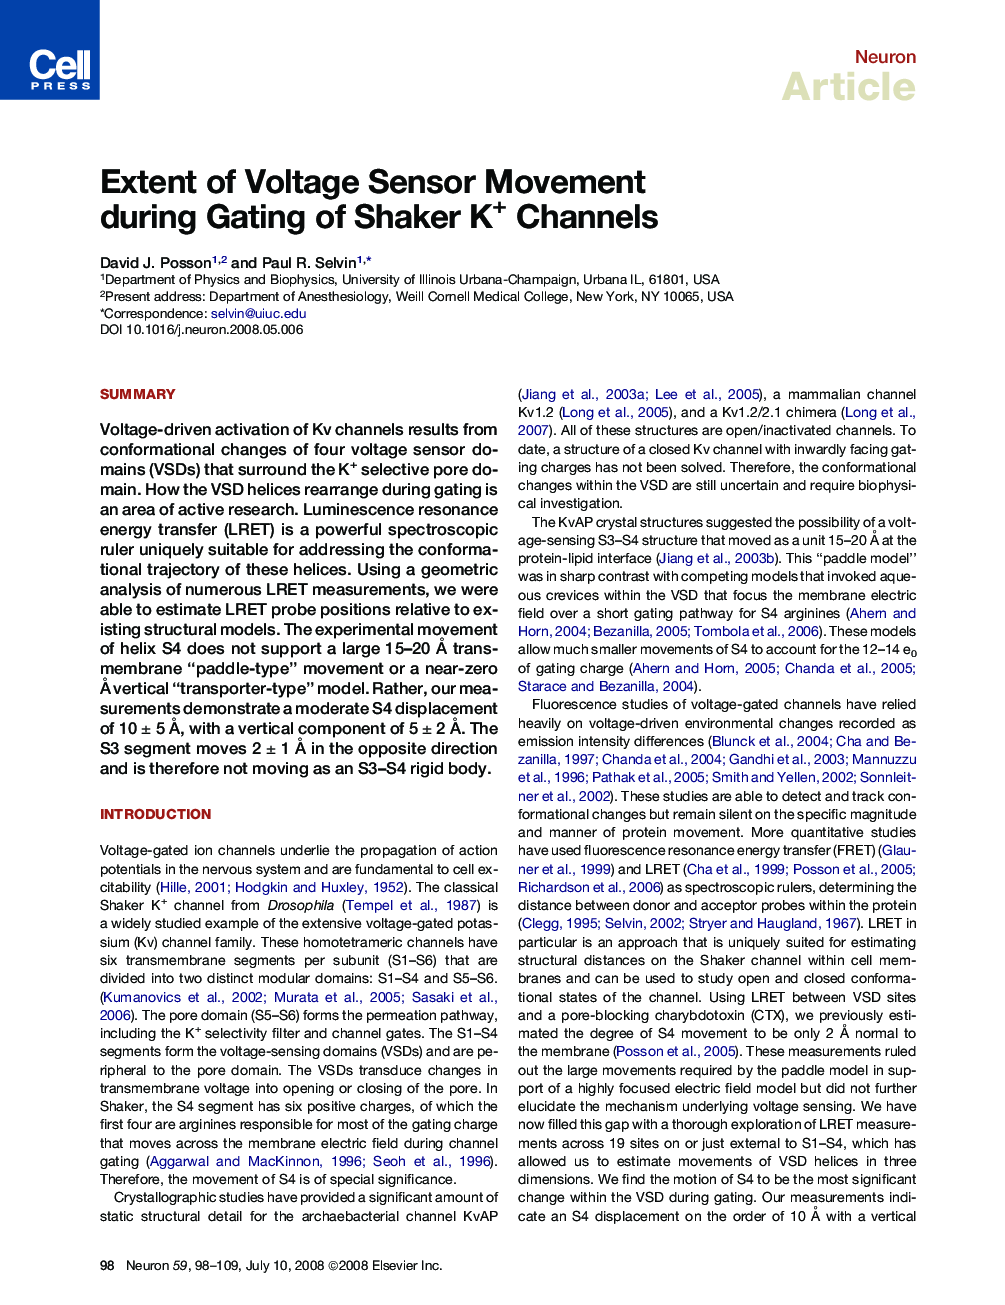 Extent of Voltage Sensor Movement during Gating of Shaker K+ Channels